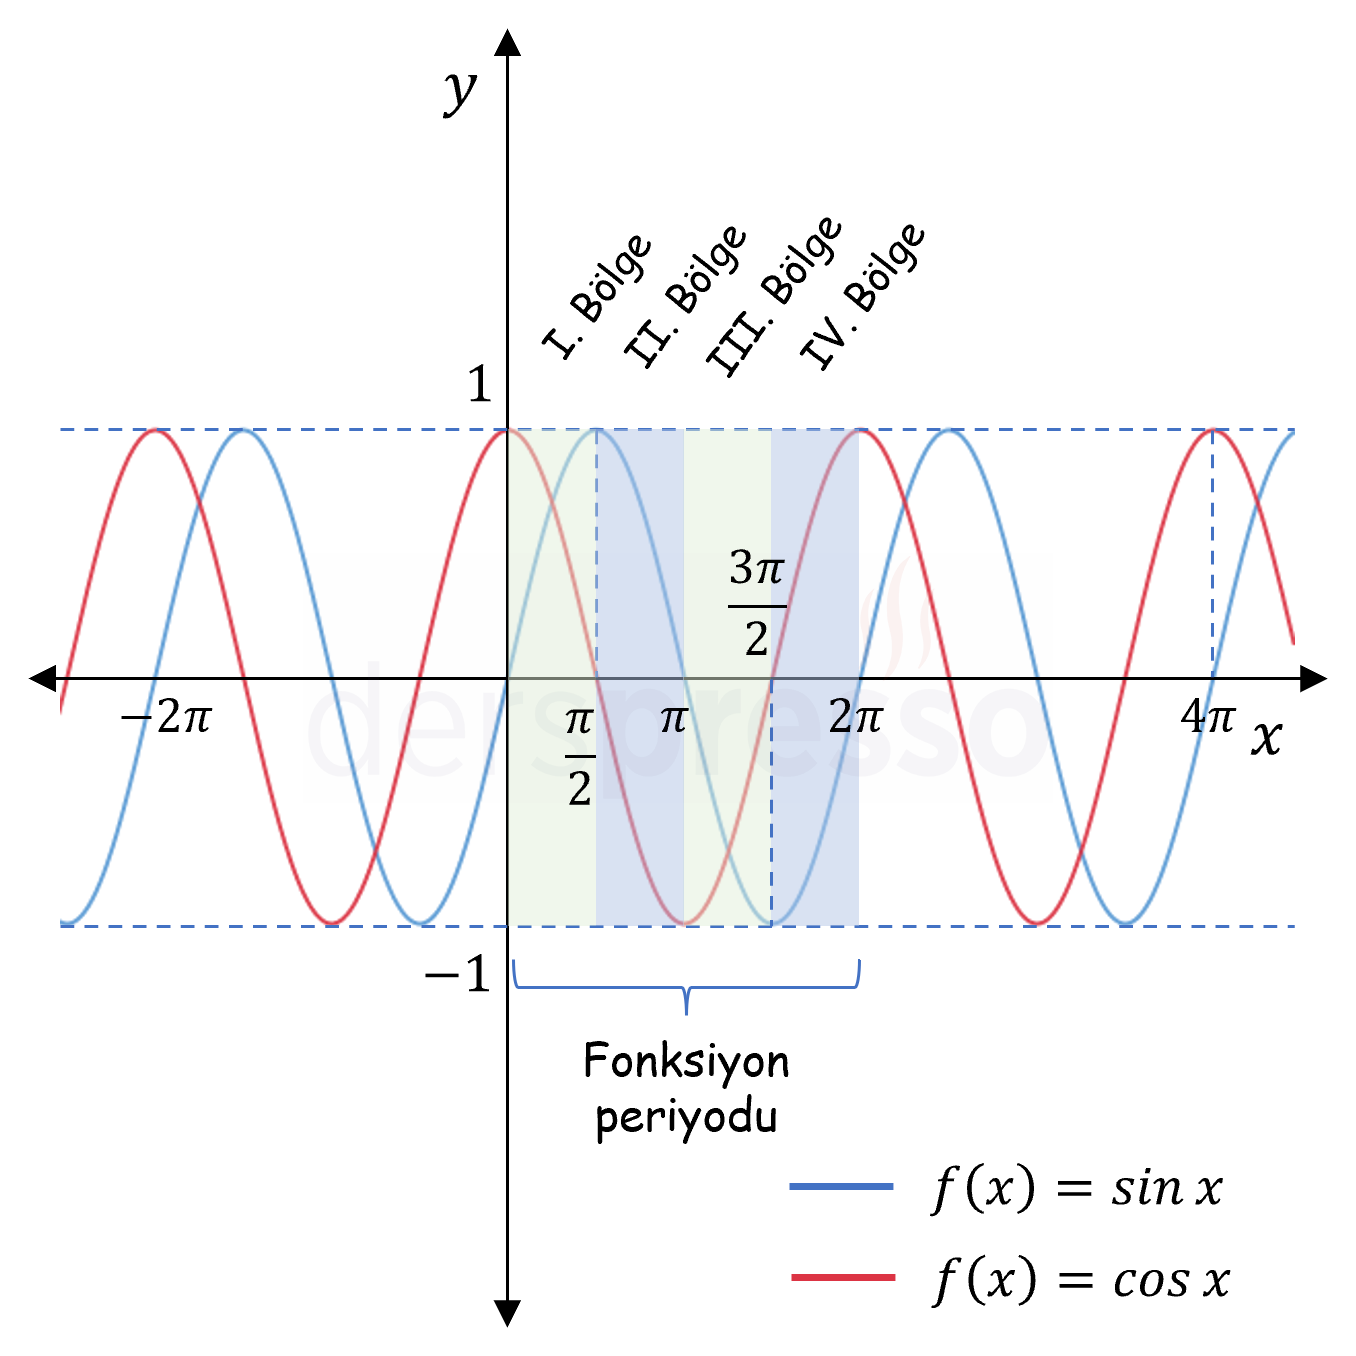 Sinüs-kosinüs fonksiyon grafikleri